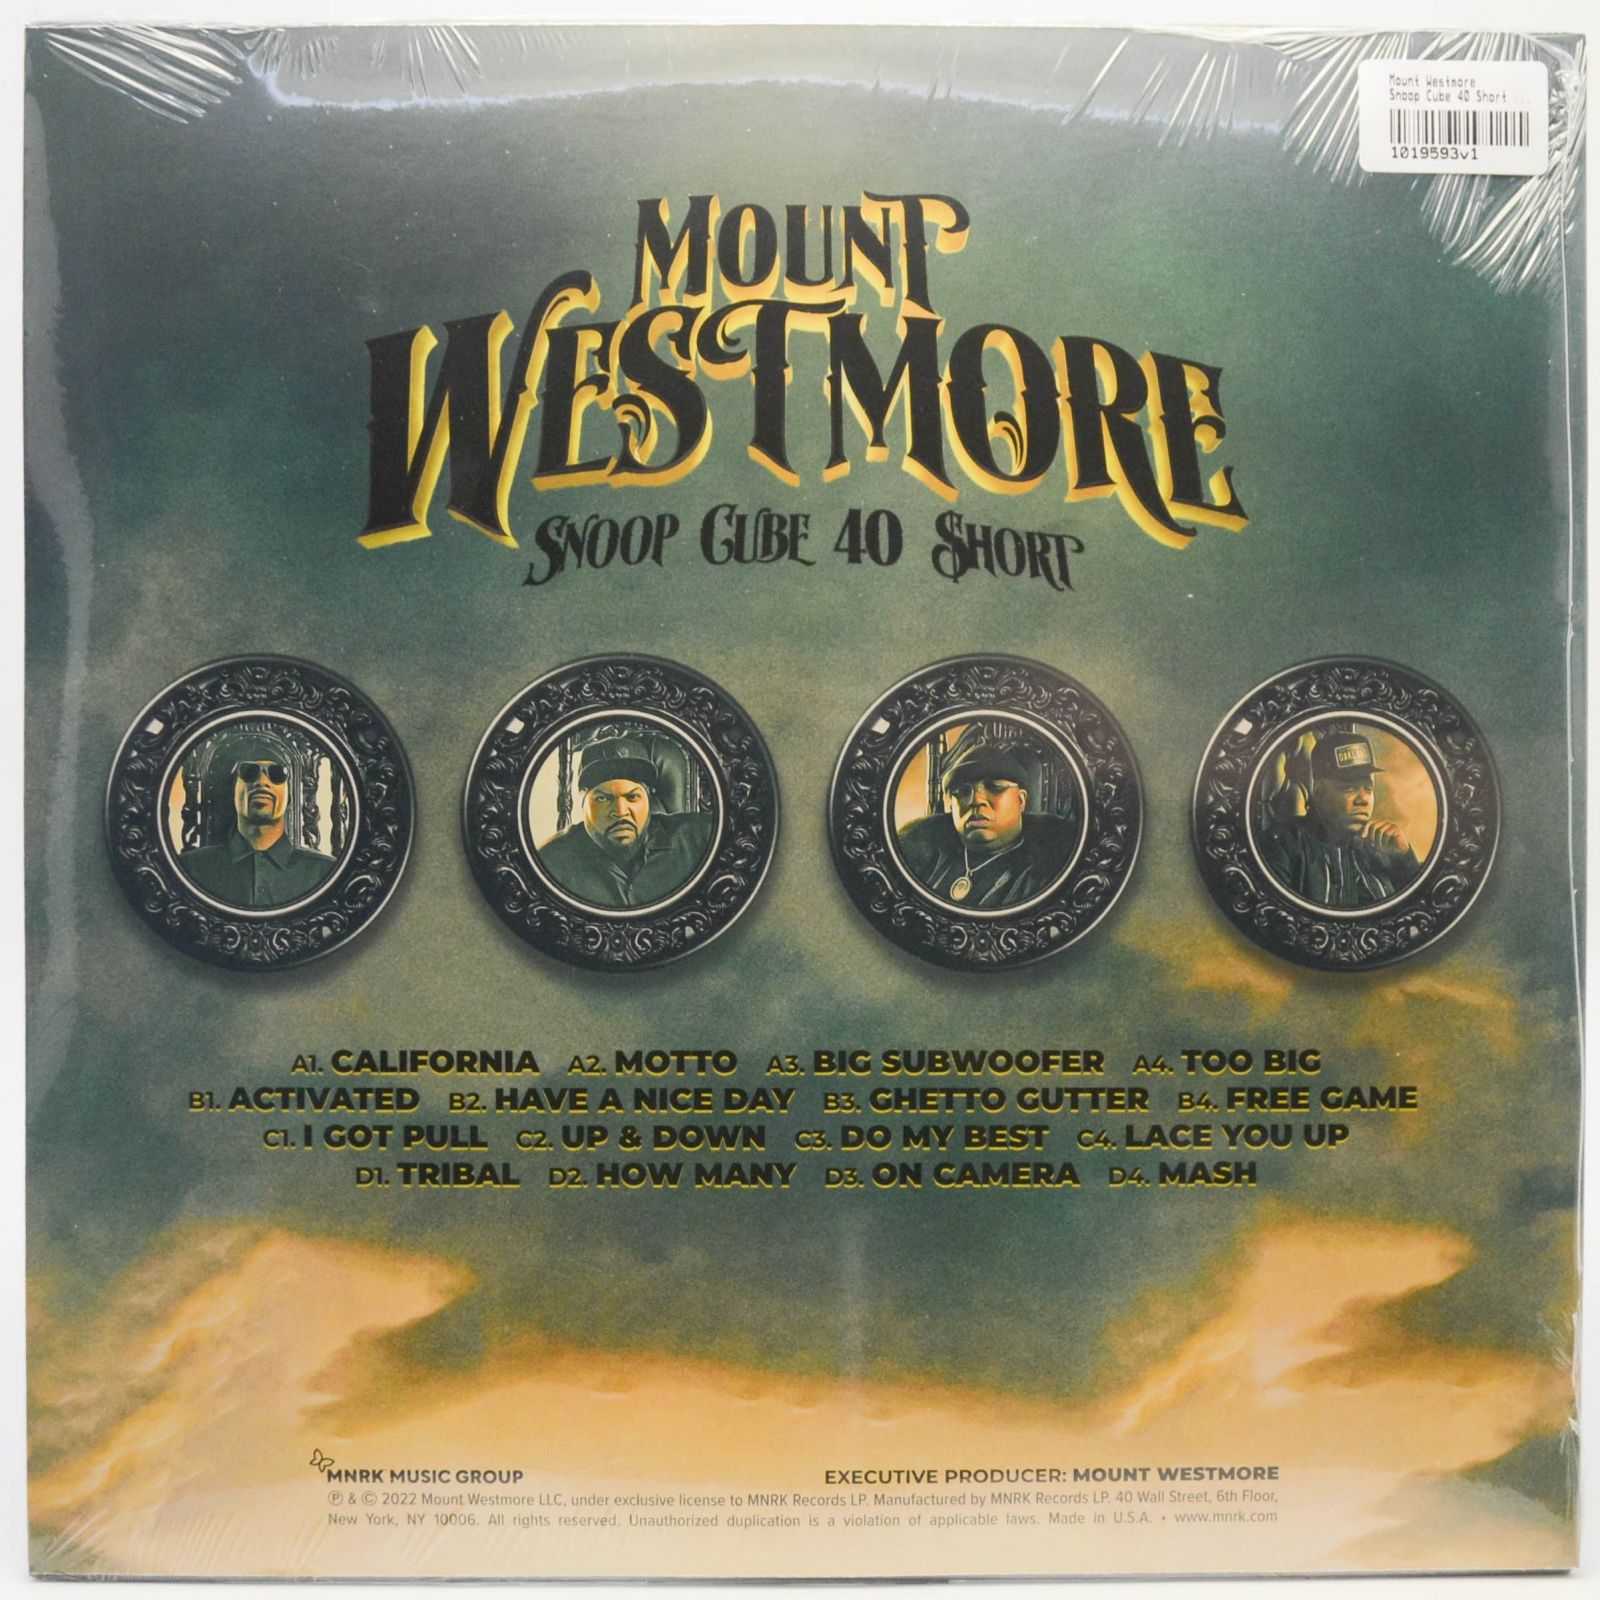 Mount Westmore — Snoop Cube 40 $hort (2LP, USA), 2023